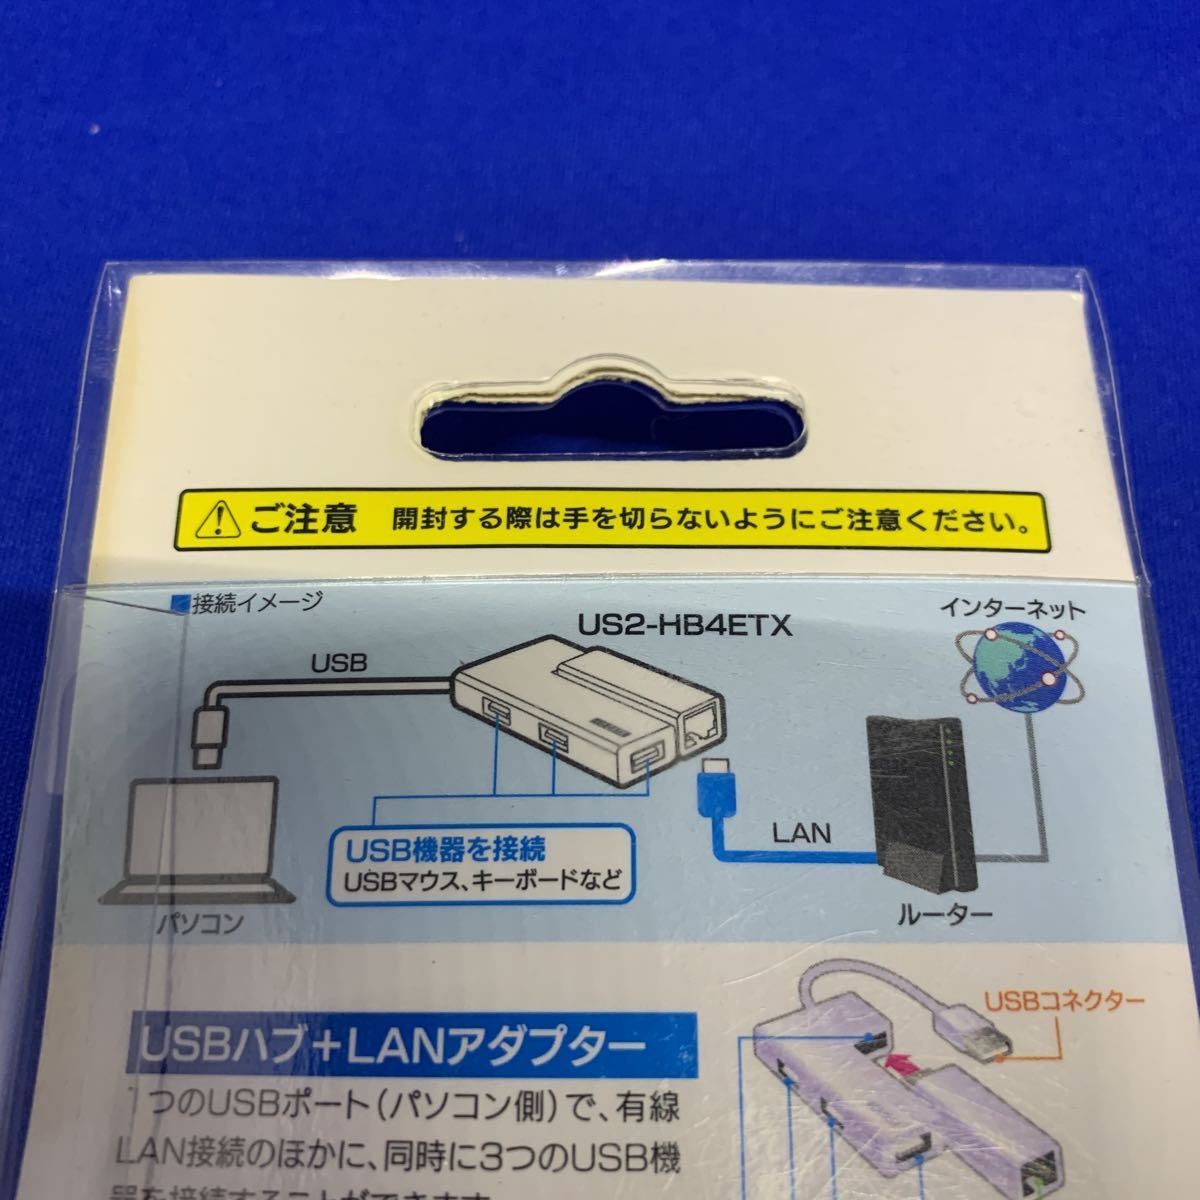 Z9421 I-O DATA LANアダプター搭載USB 2.0ハブ US2-HB4ETX_画像3